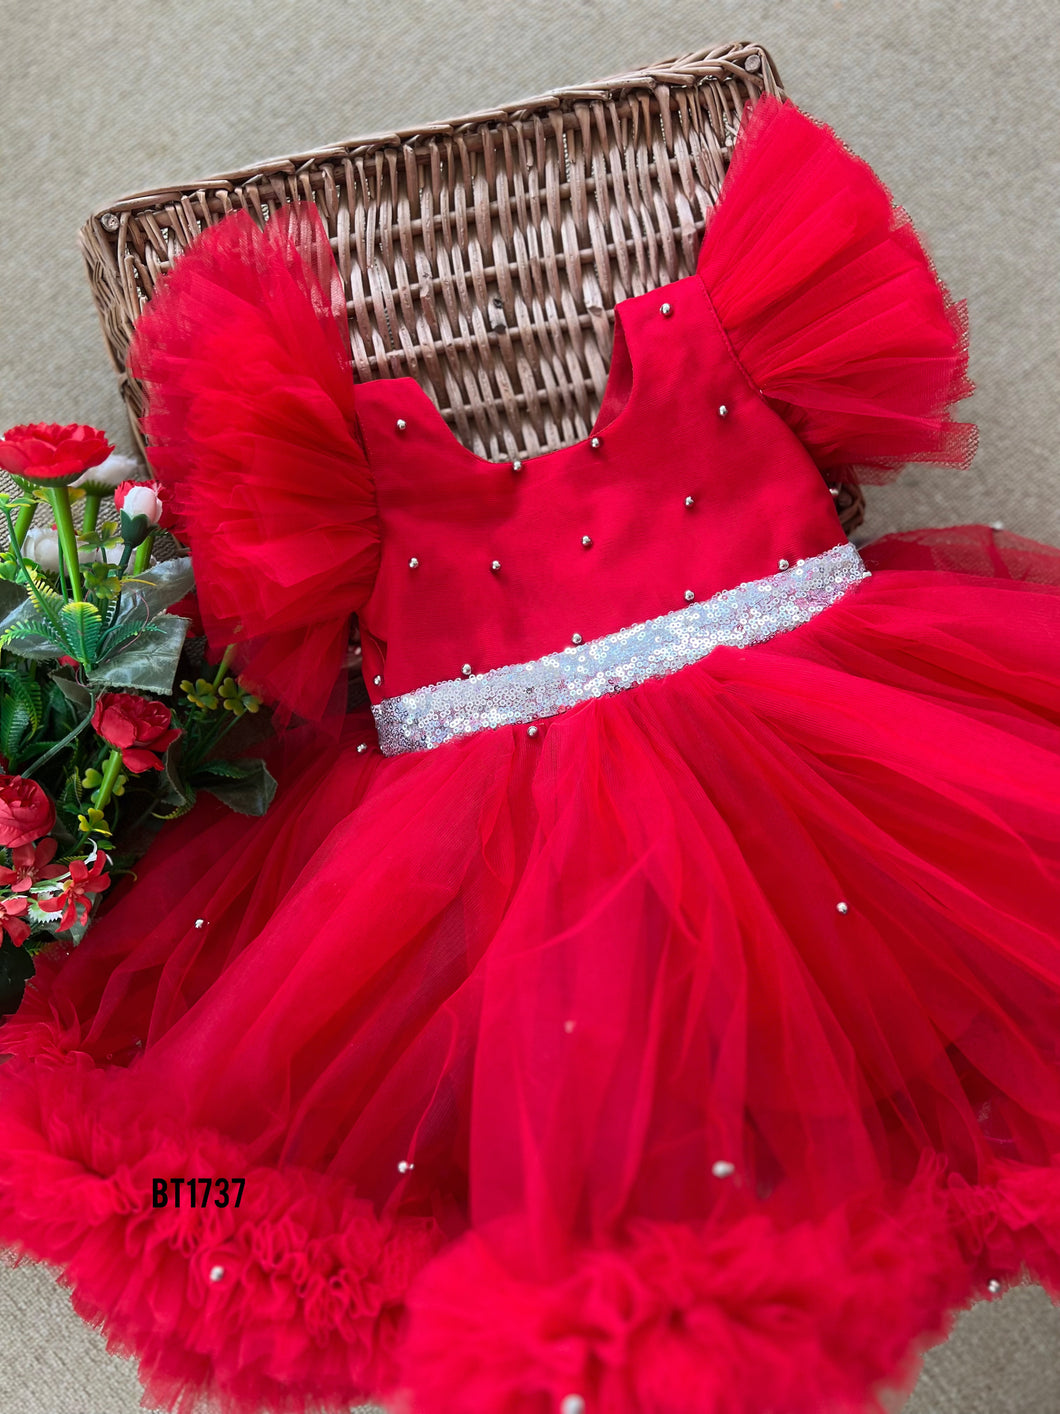 BT1737 Ruby Red Radiance Dress - A Sparkling Celebration for Your Little Star